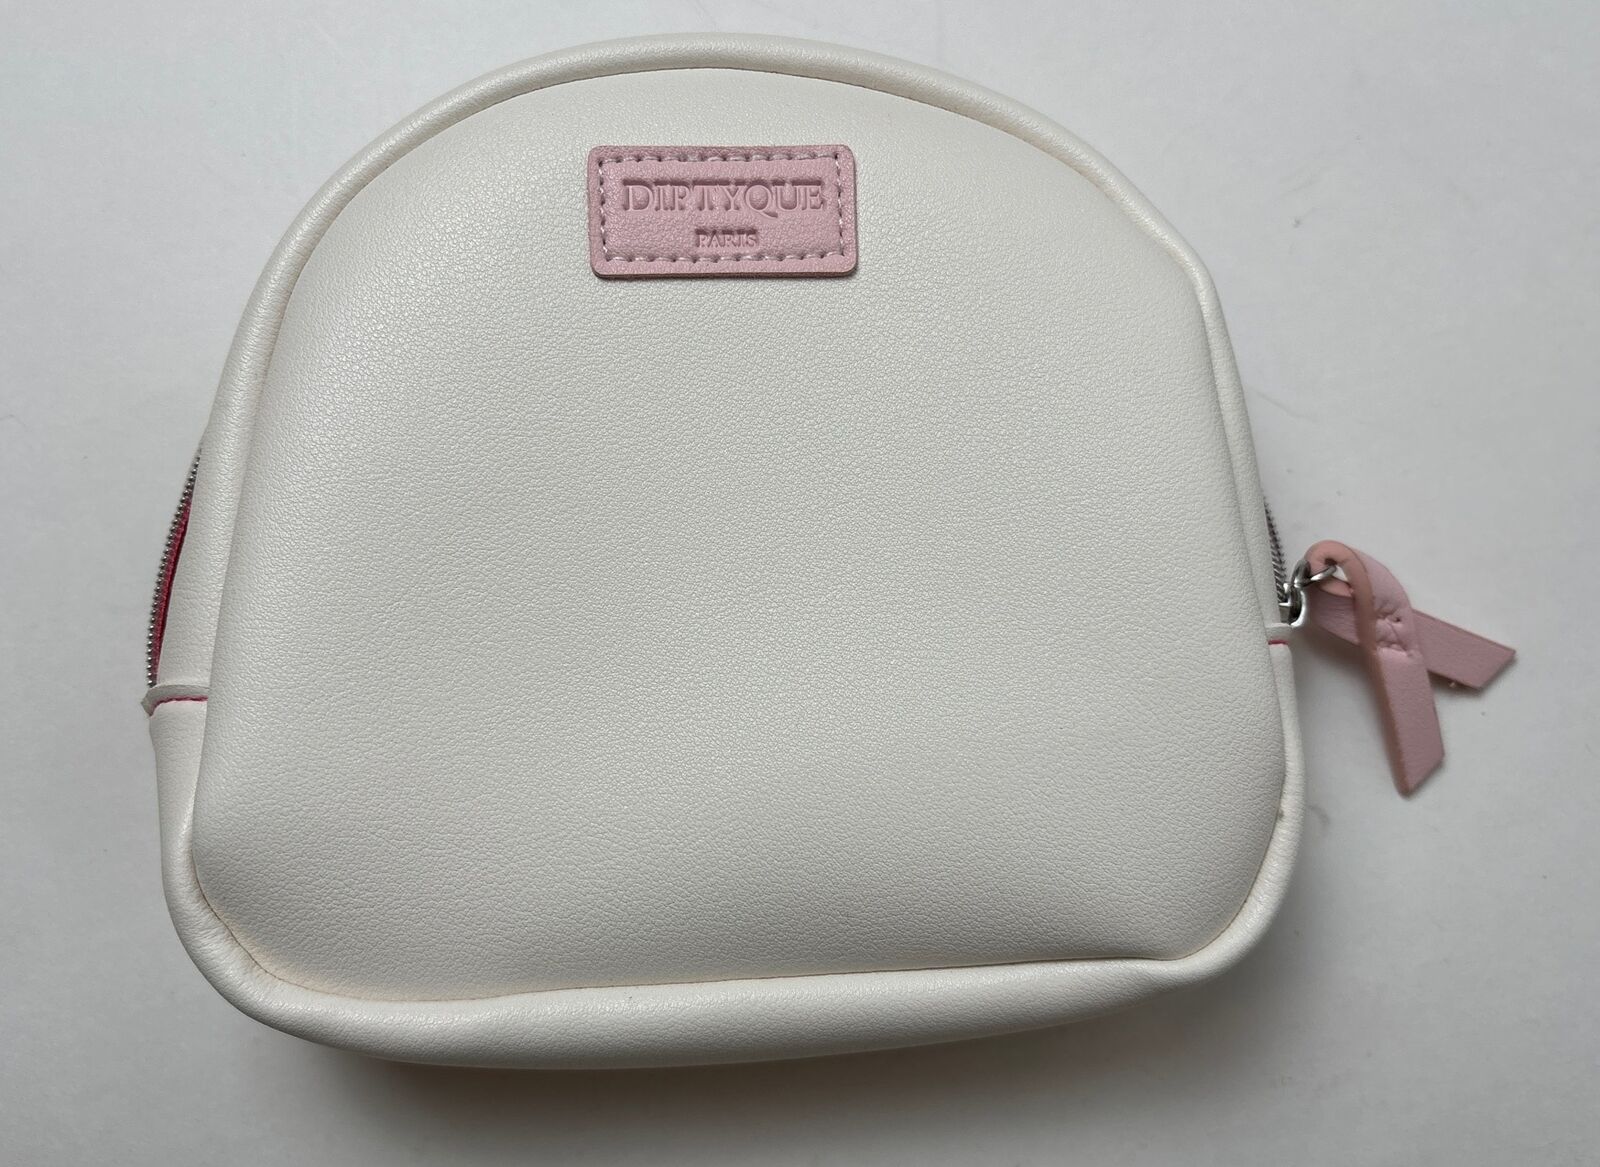 DIPTYQUE PARIS Breast Cancer Awareness Toiletries Bag Qatar Airways, Bag Only